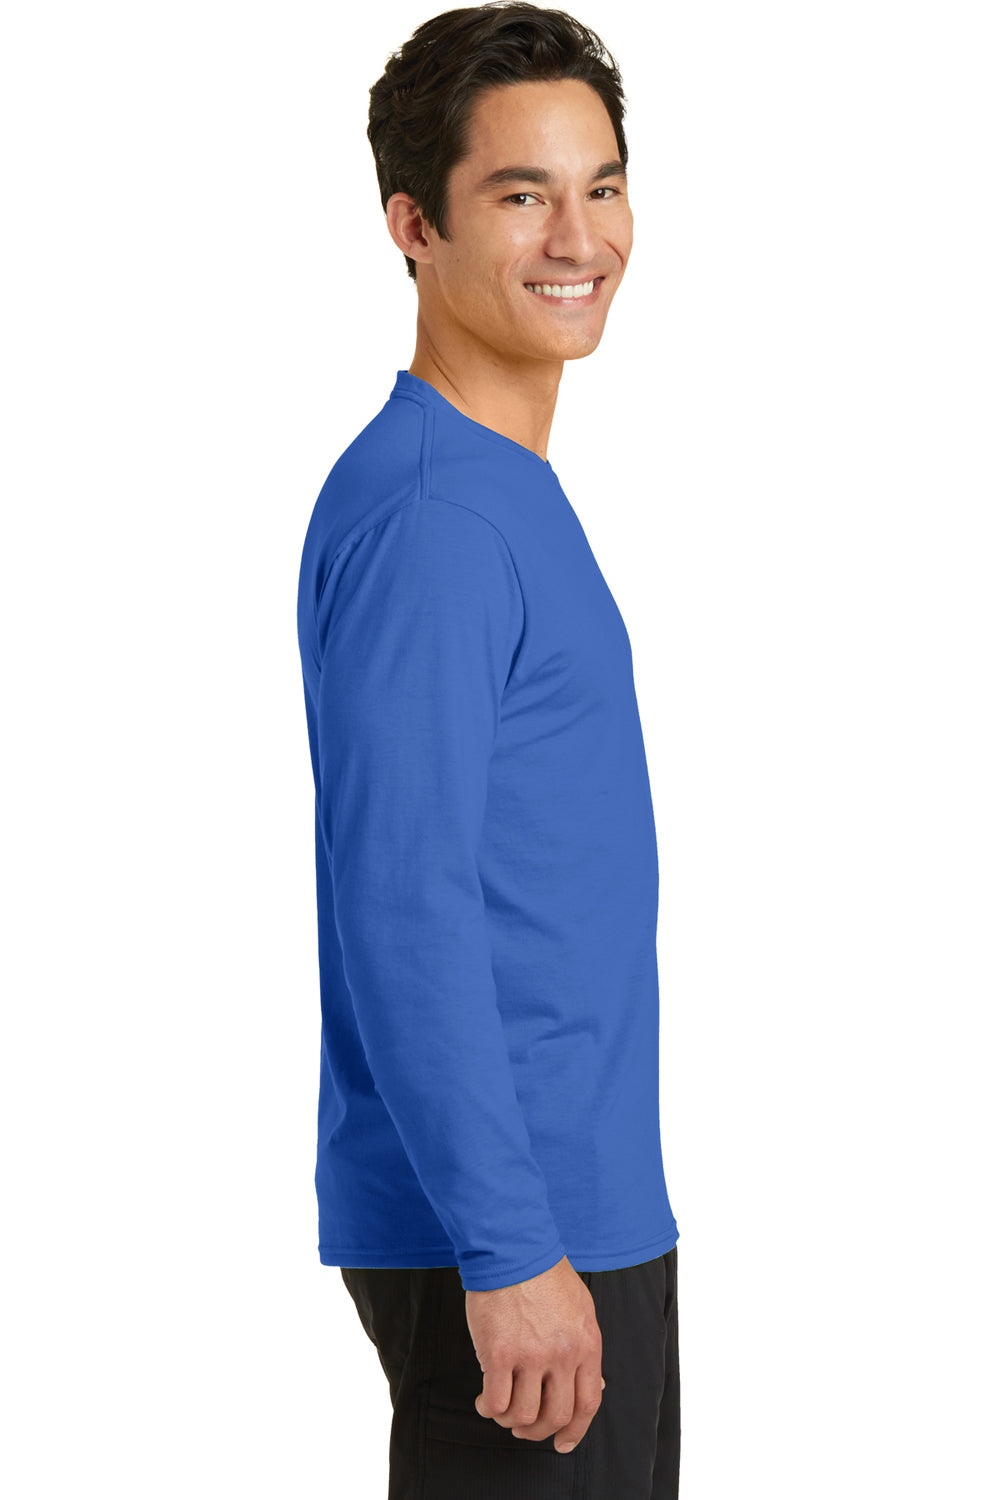 Port & Company PC381LS Mens Dry Zone Performance Moisture Wicking Long Sleeve Crewneck T-Shirt Royal Blue Side